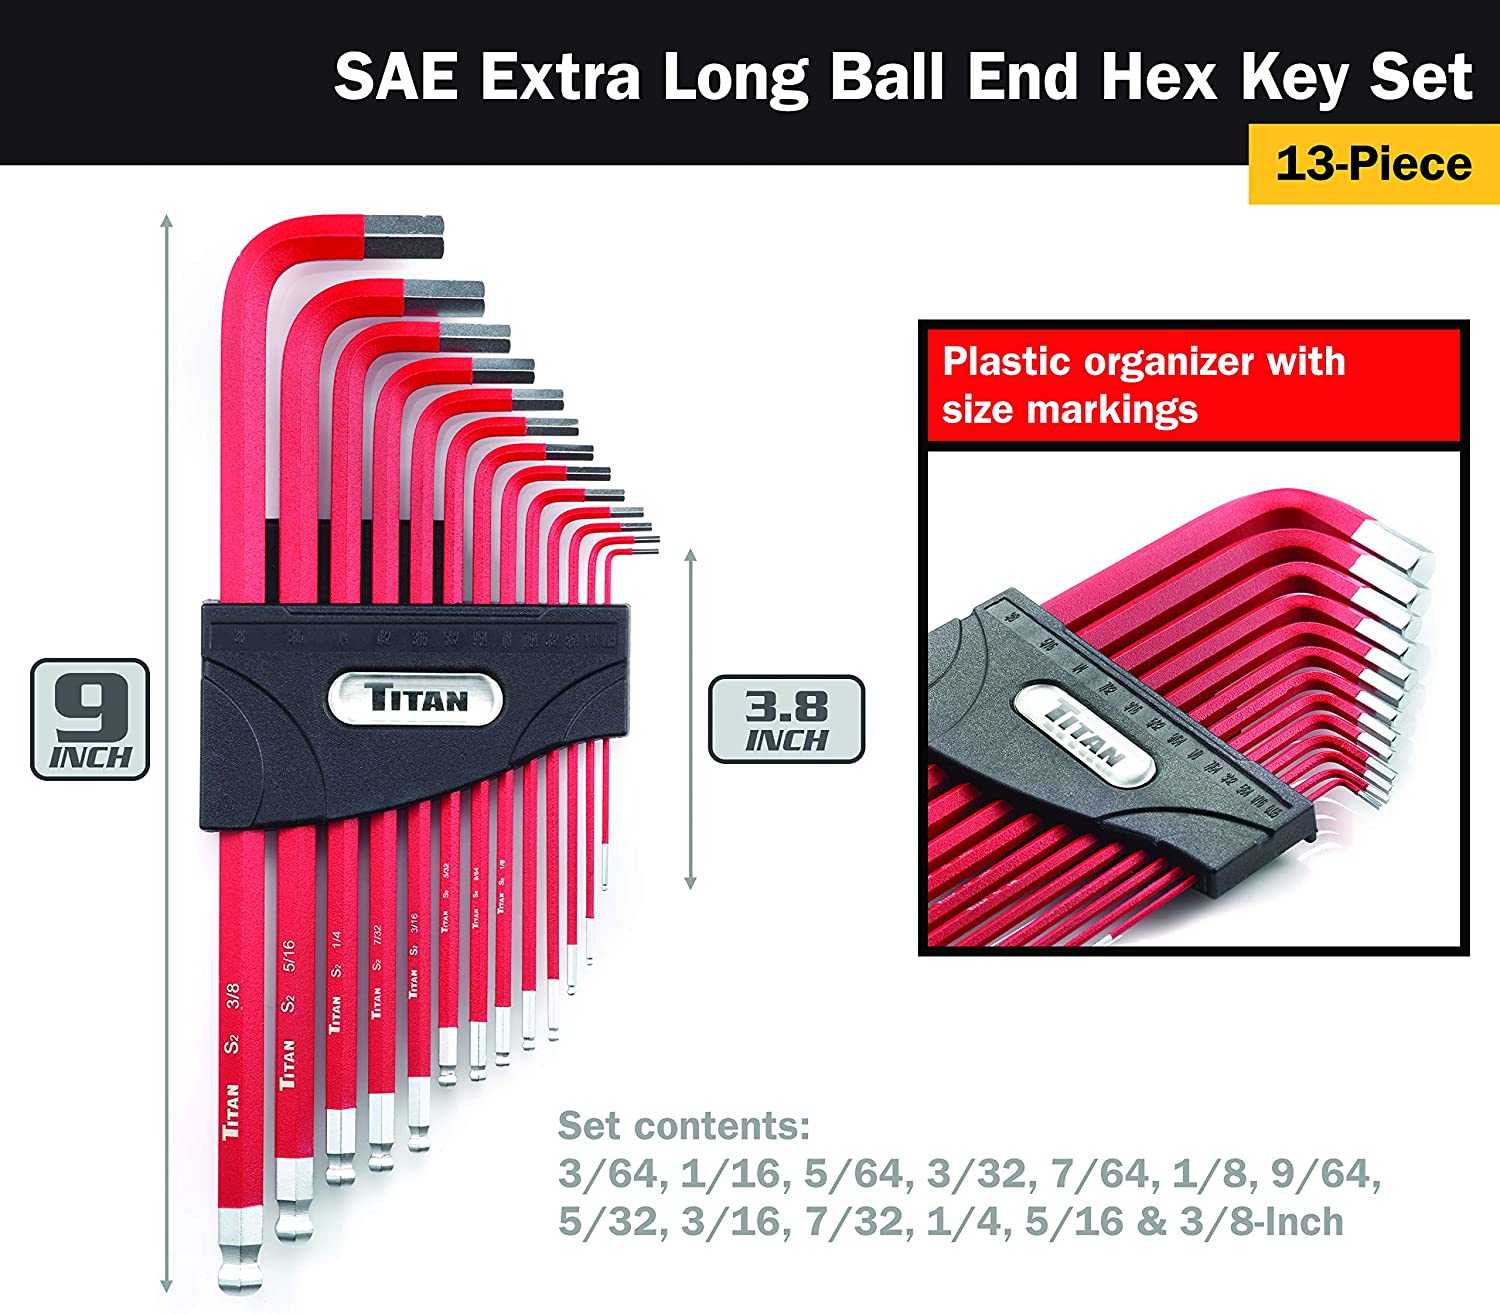 Titan Tools, Titan 12713 13-Piece SAE Extra Long Ball End Hex Key Set